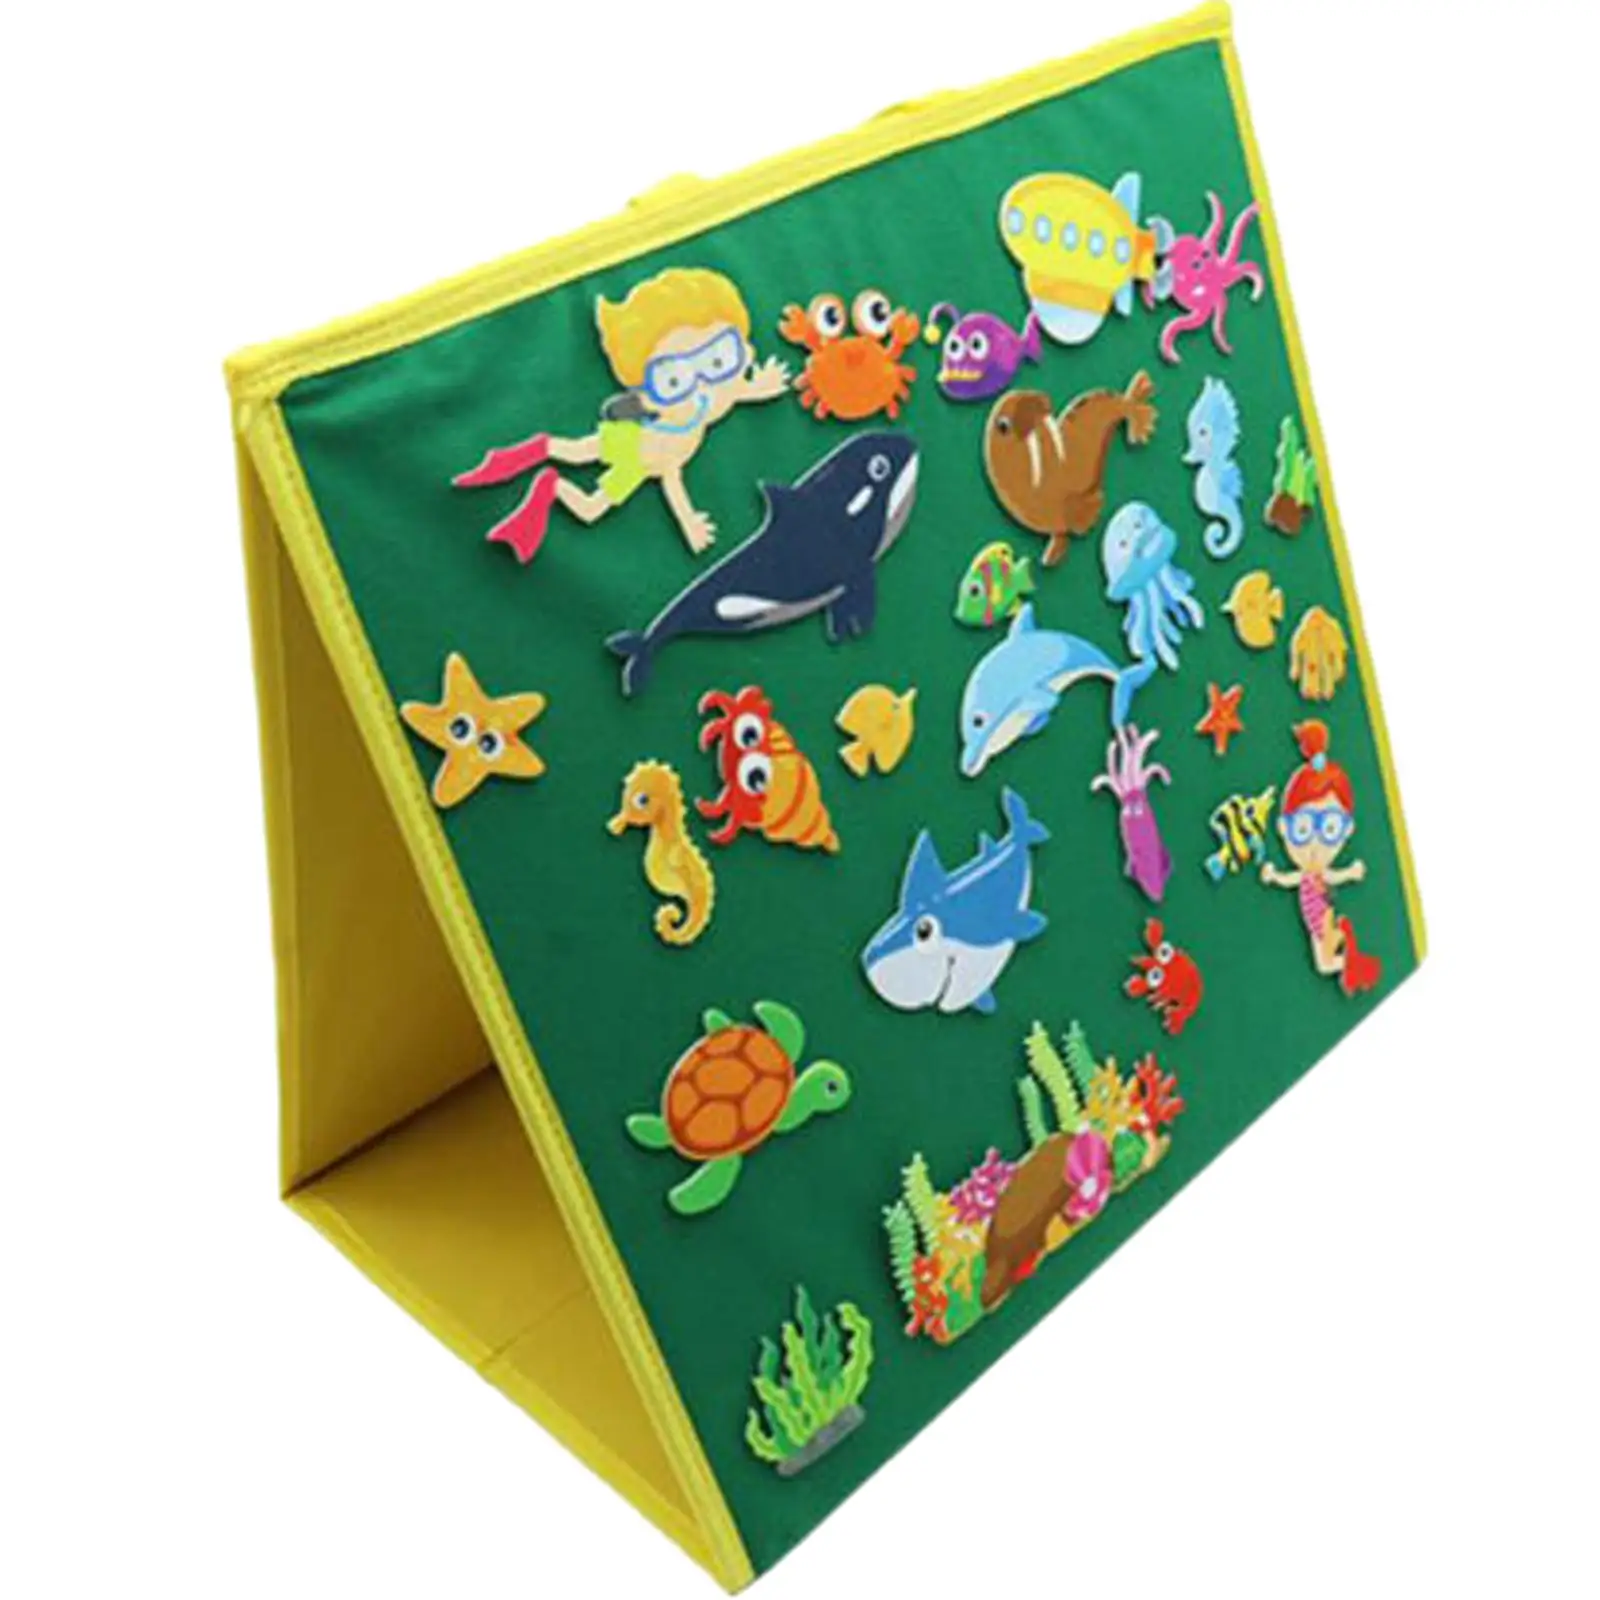 Felt Flannel Board Quiet Book Household Sensory Toys Felt Stories Activities Kits Freestanding Felt Board for Toddlers